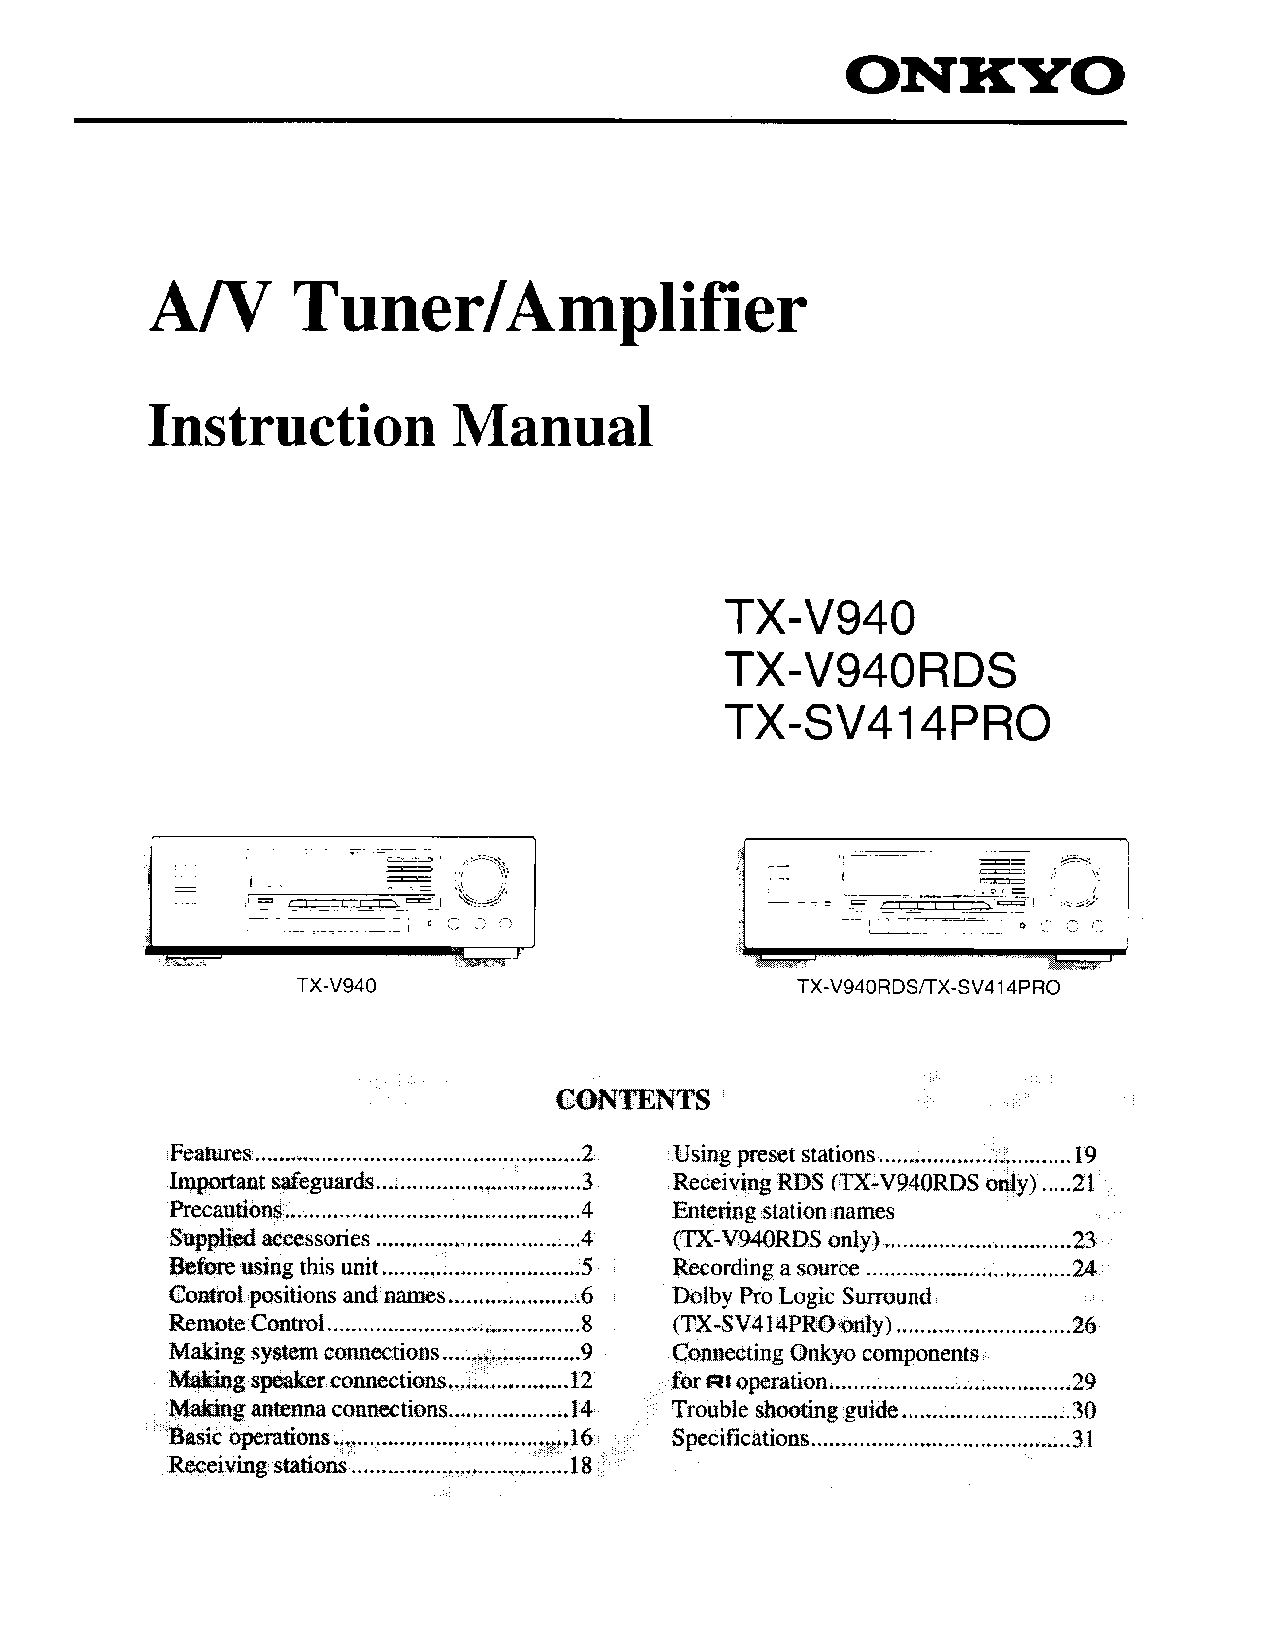 Onkyo TX-SV414PRO, TX-V940, TX-V940RDS Instruction Manual